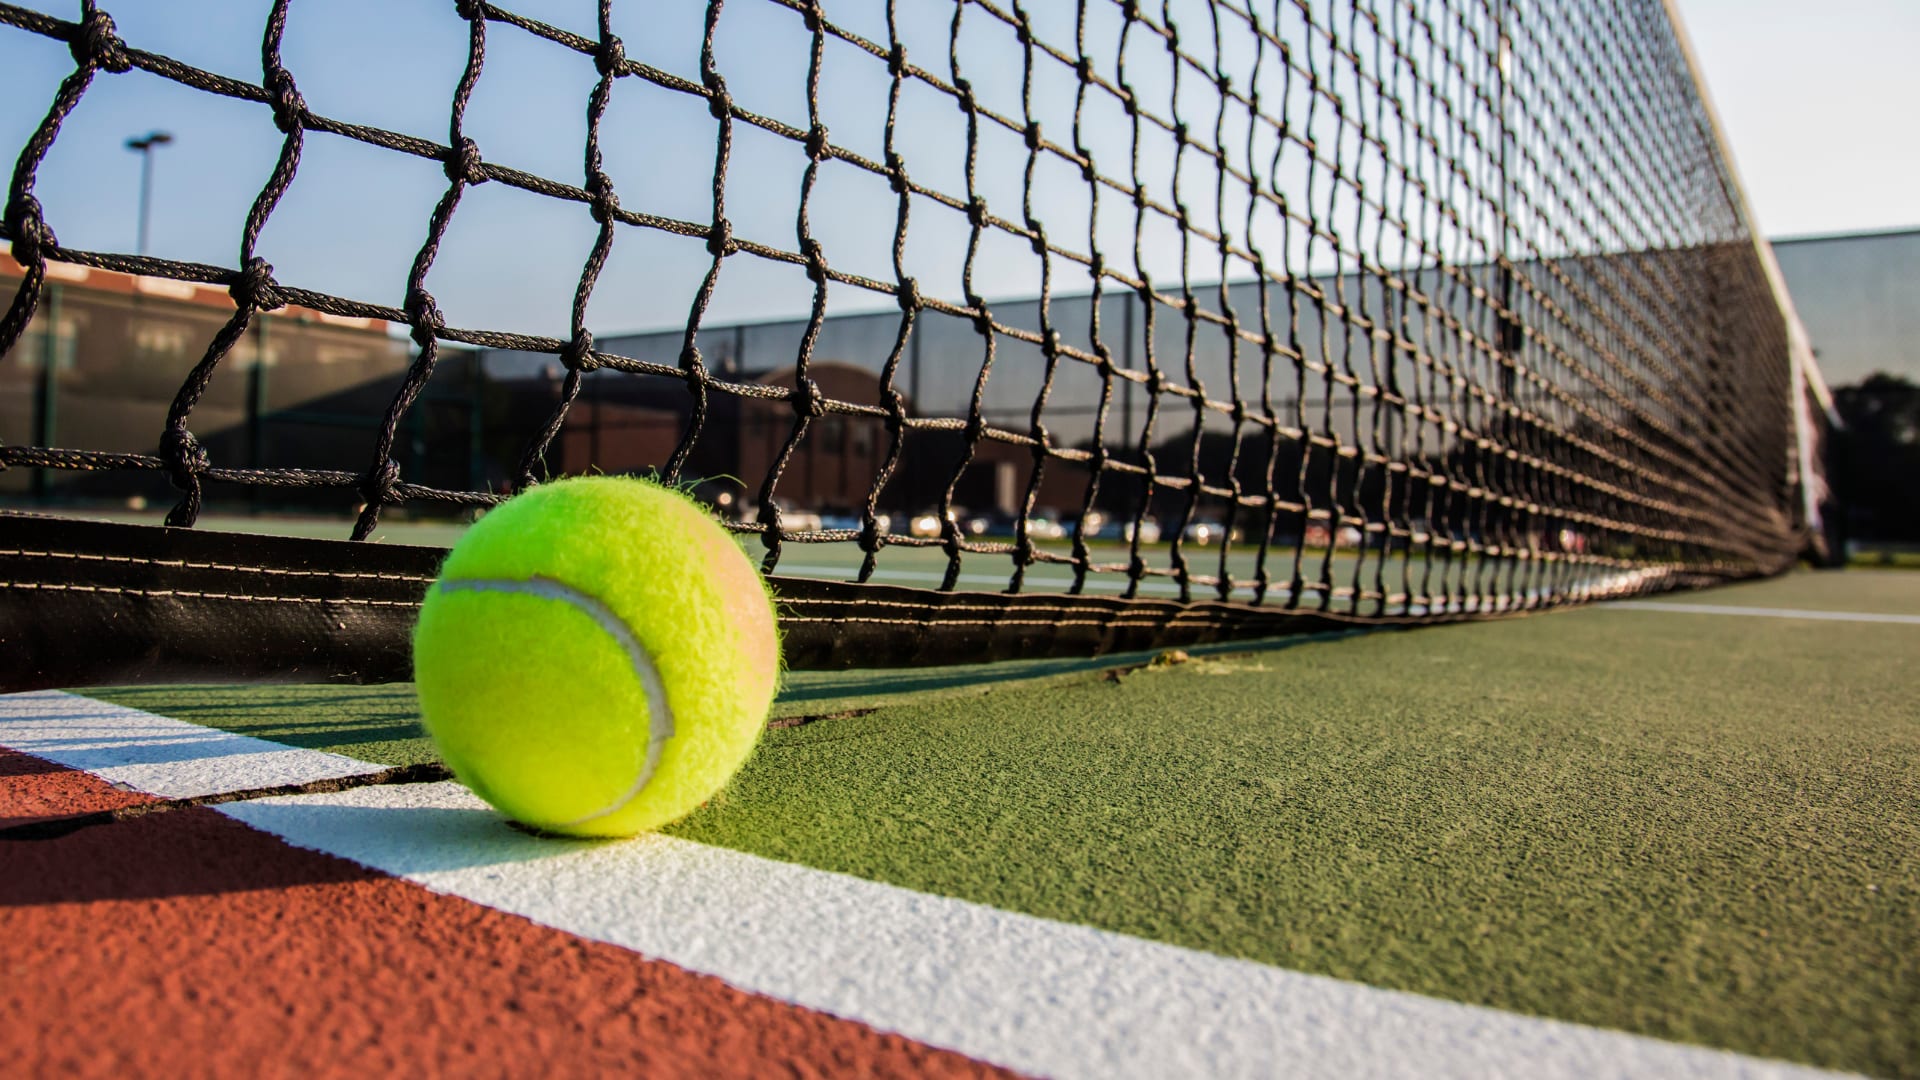 Tennis ball on the ground of an outdoor tennis court